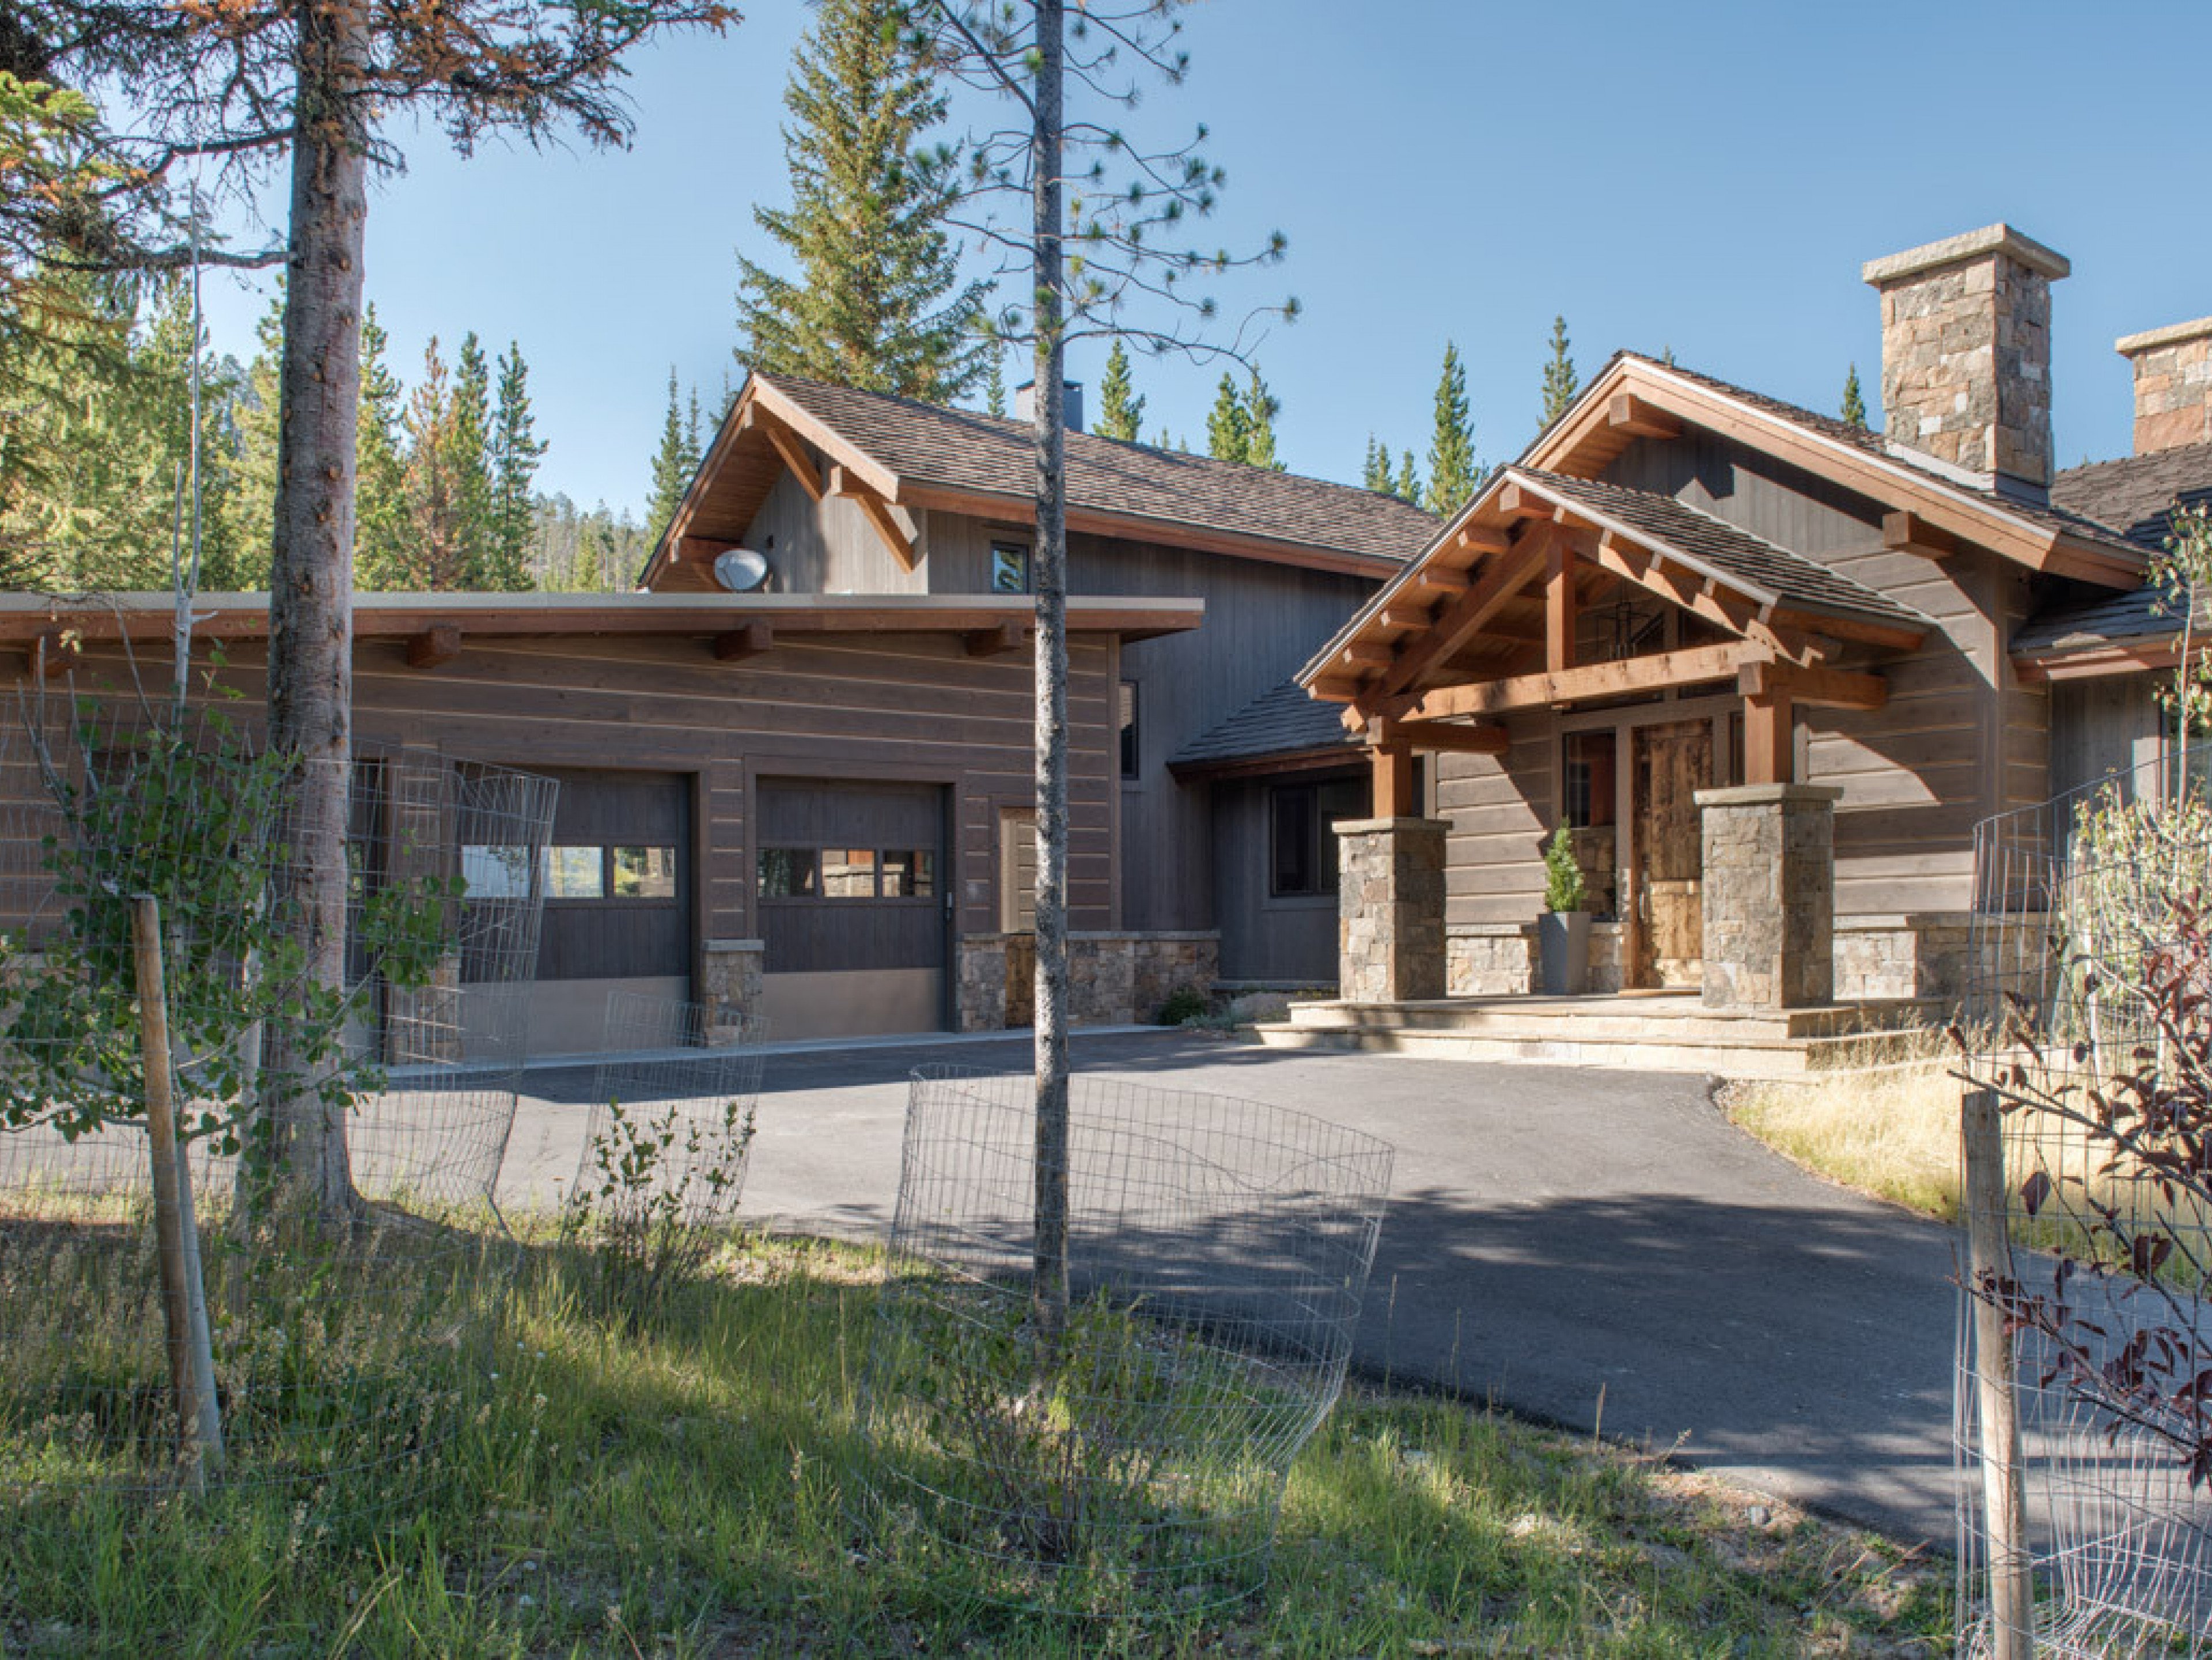 Big Sky 3 cabin rentals near Yellowstone